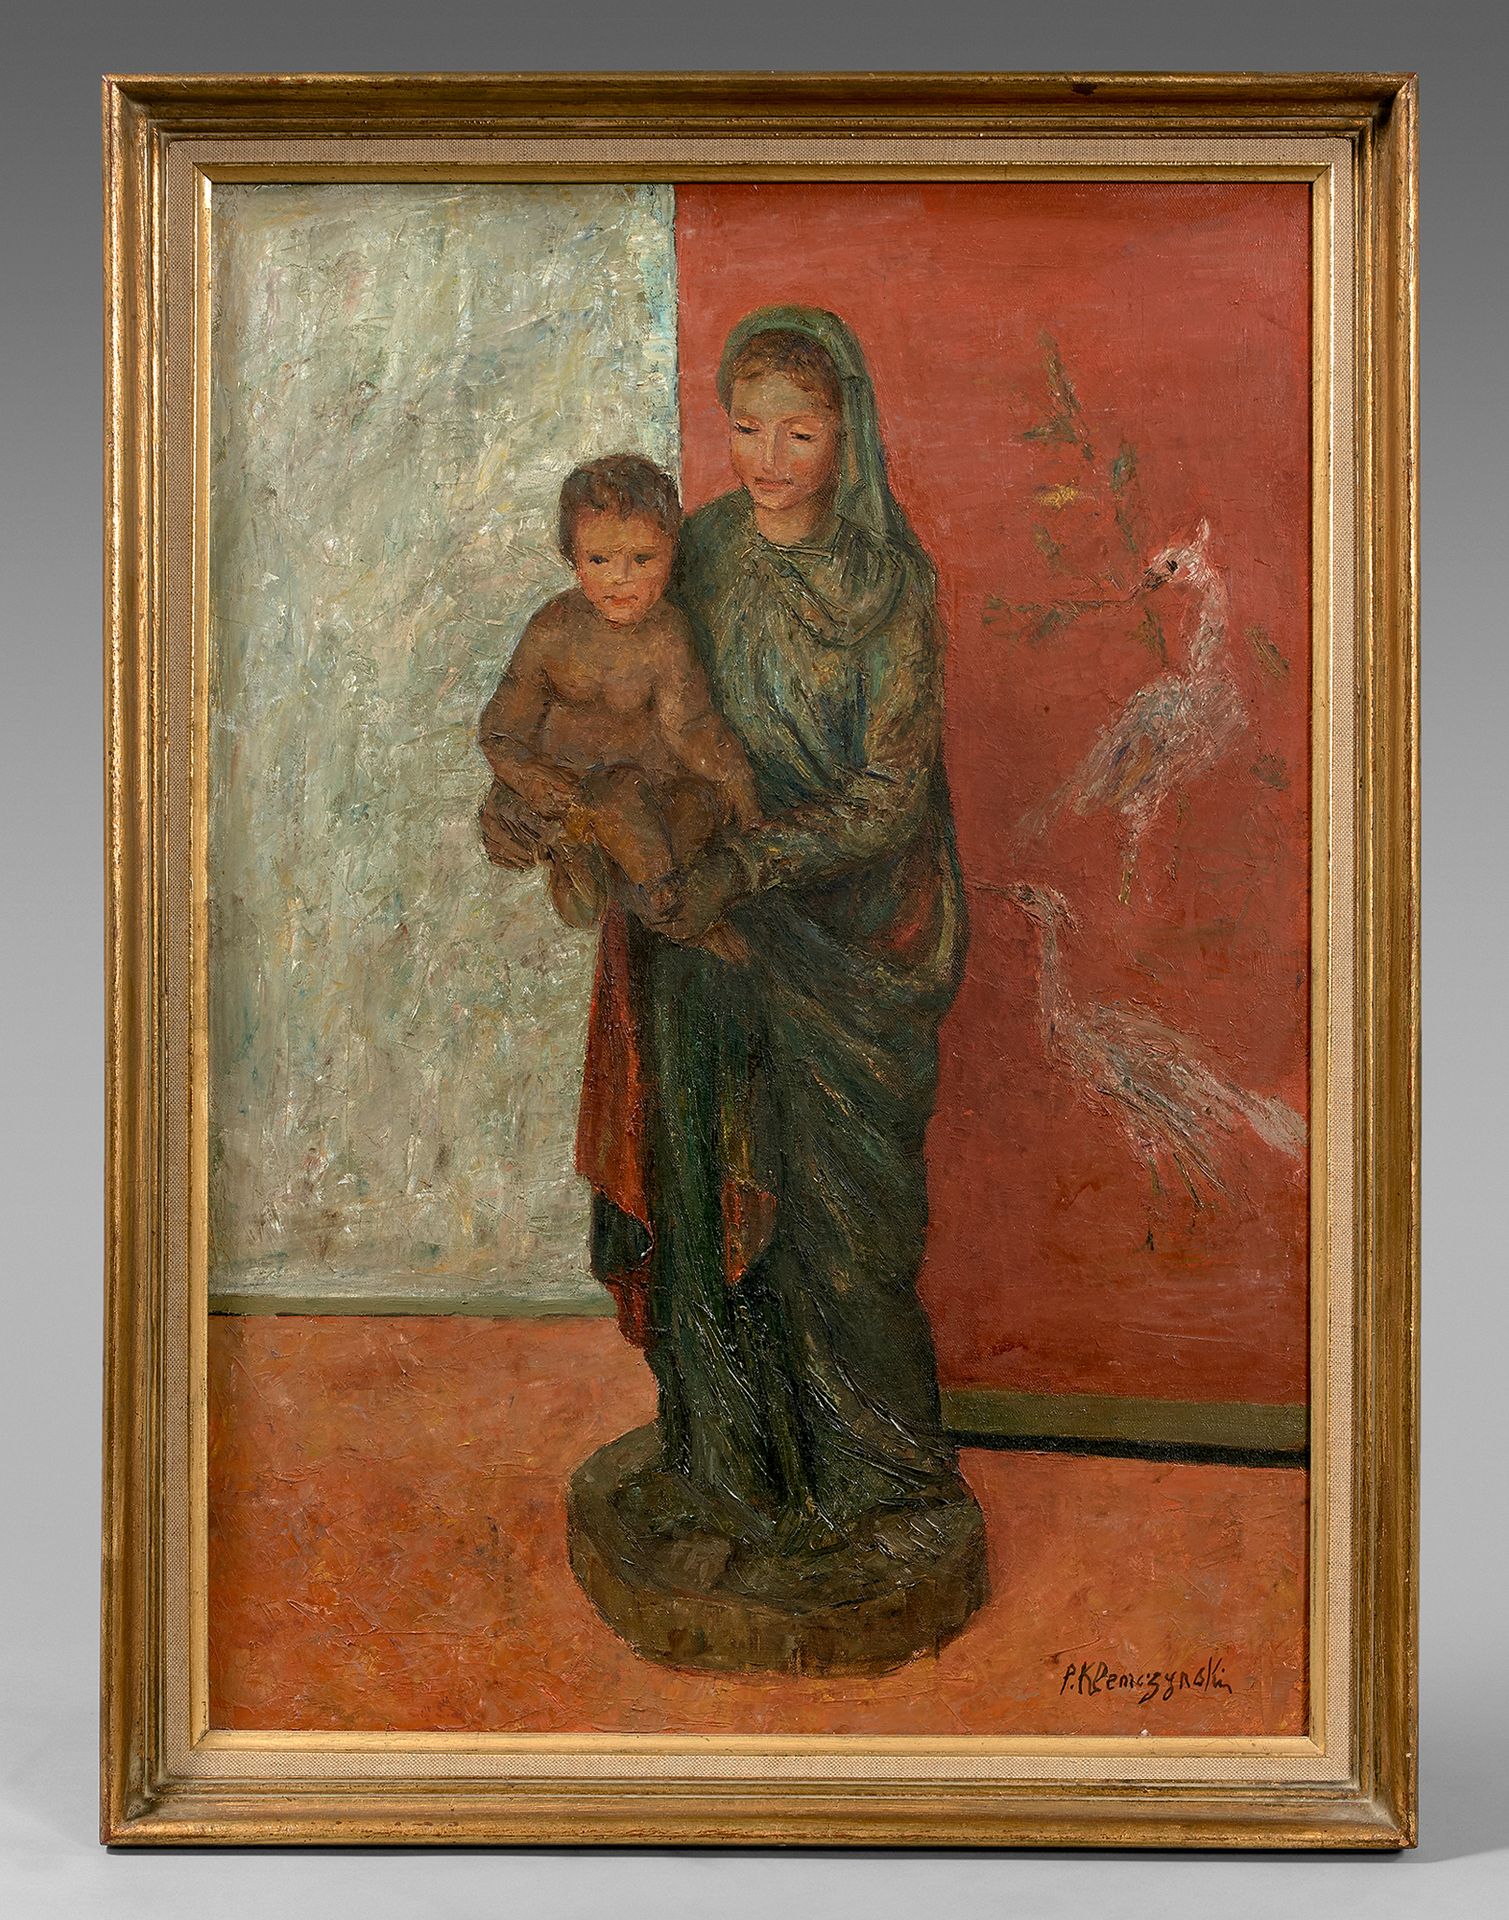 Pierre KLEMCZYNSKI Virgen con el Niño
Óleo sobre lienzo, firmado abajo a la dere&hellip;